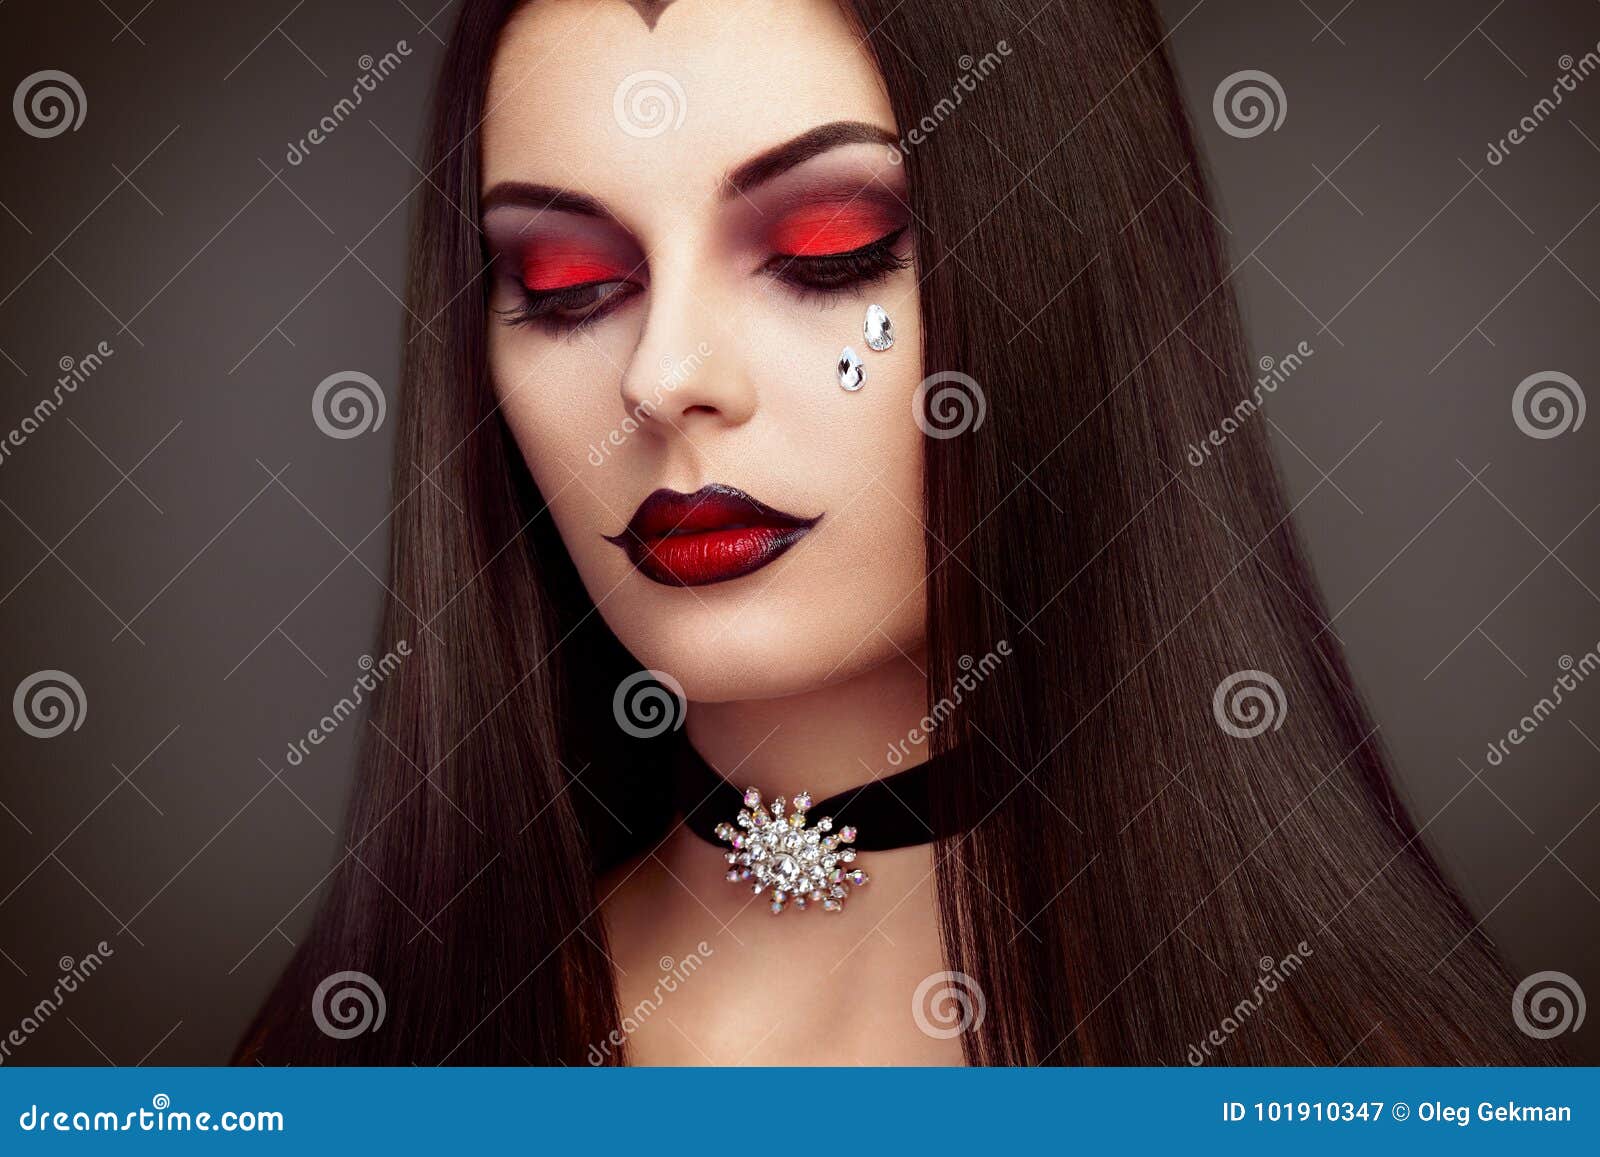 Halloween Vampire Woman Portrait Stock Image - Image of holiday